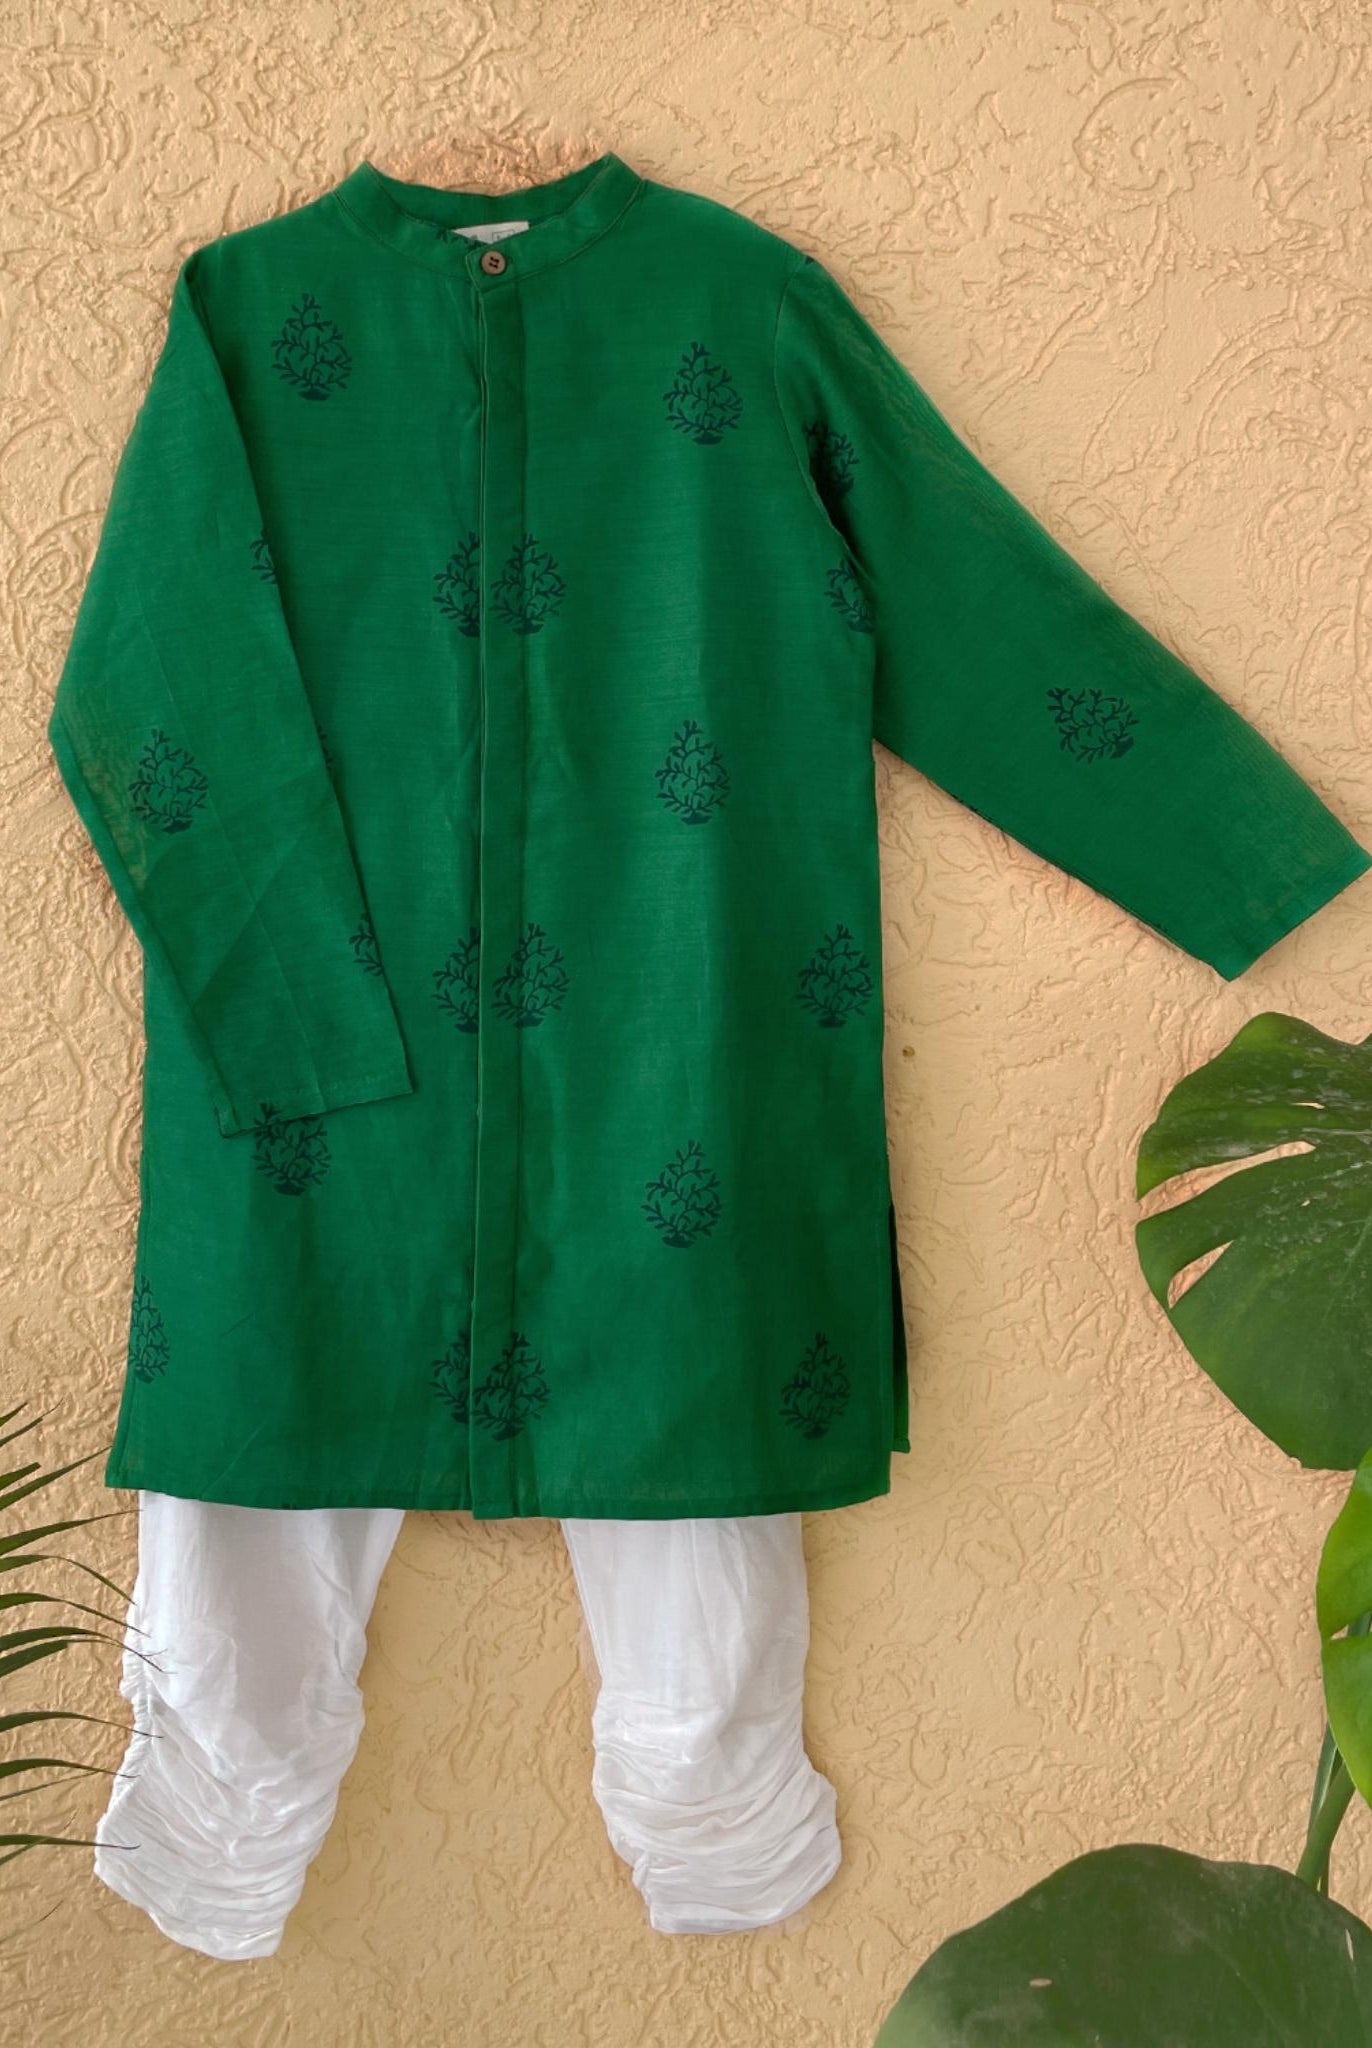 Panna Cotton Silk Green Block Printed Kurta with Pink Long Sherwani Jacket and Churidaar - CiceroniKurta SetMiko Lolo